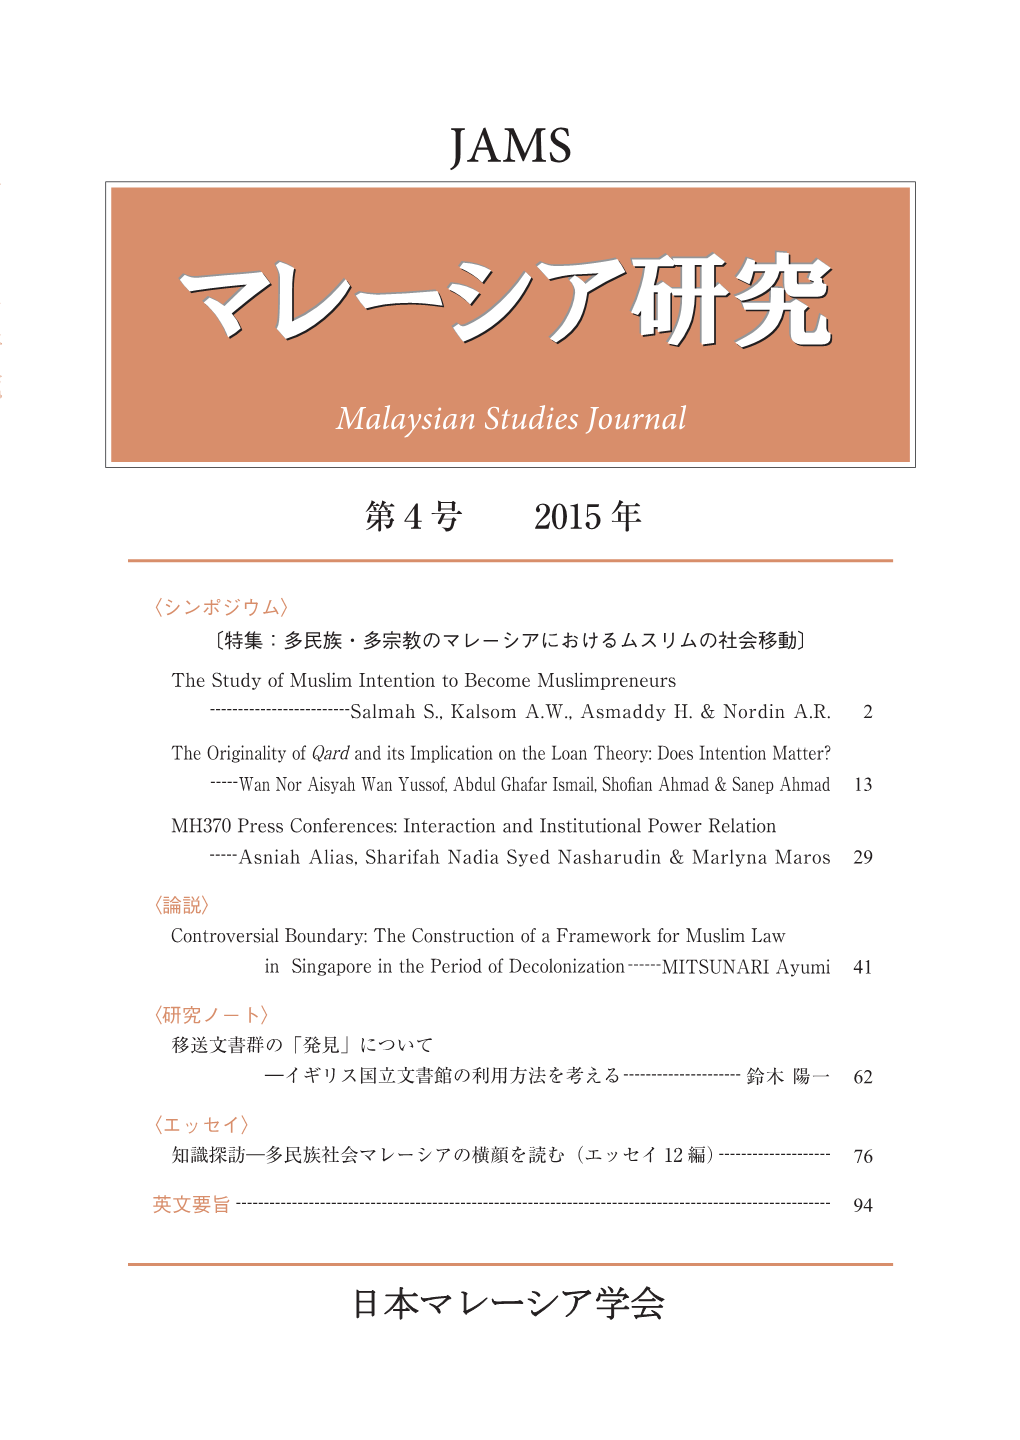 第4号 2015 年 Malaysian Studies Journal